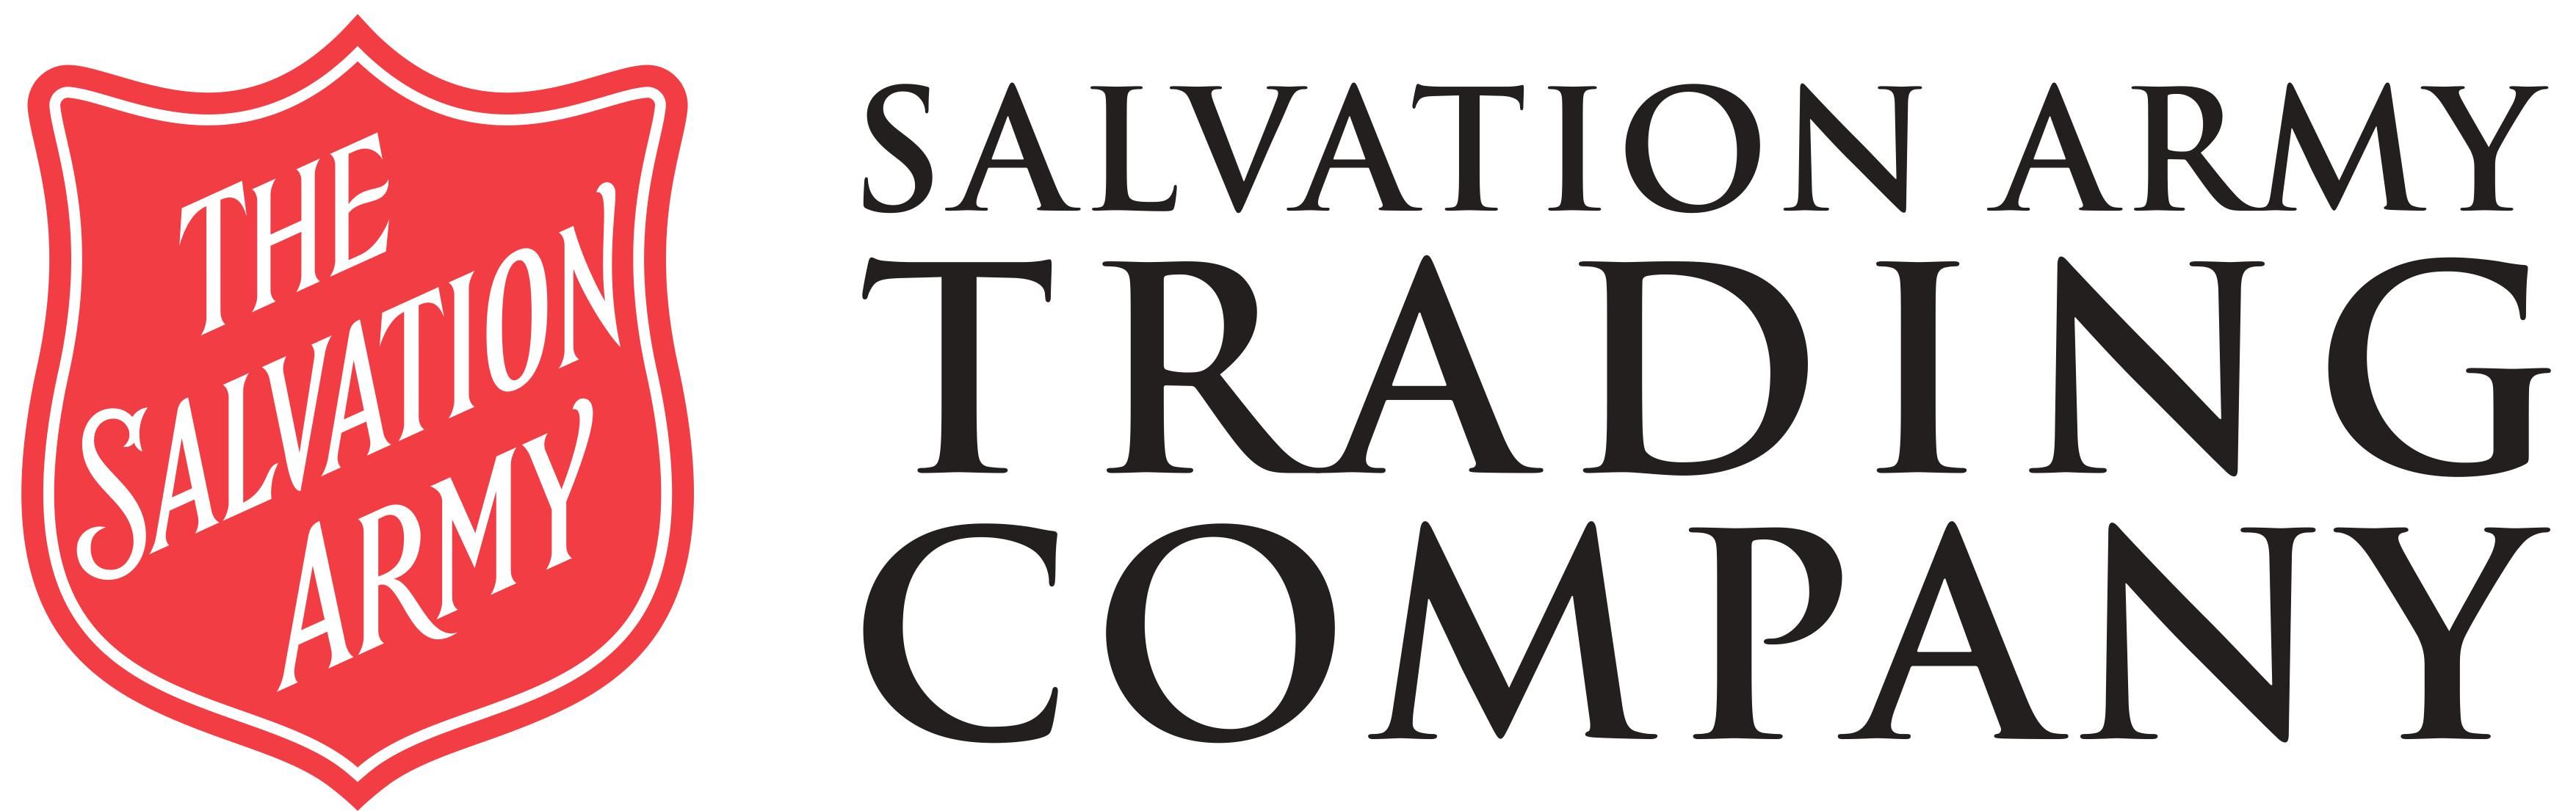 Salvation Army Trading Company Ltd